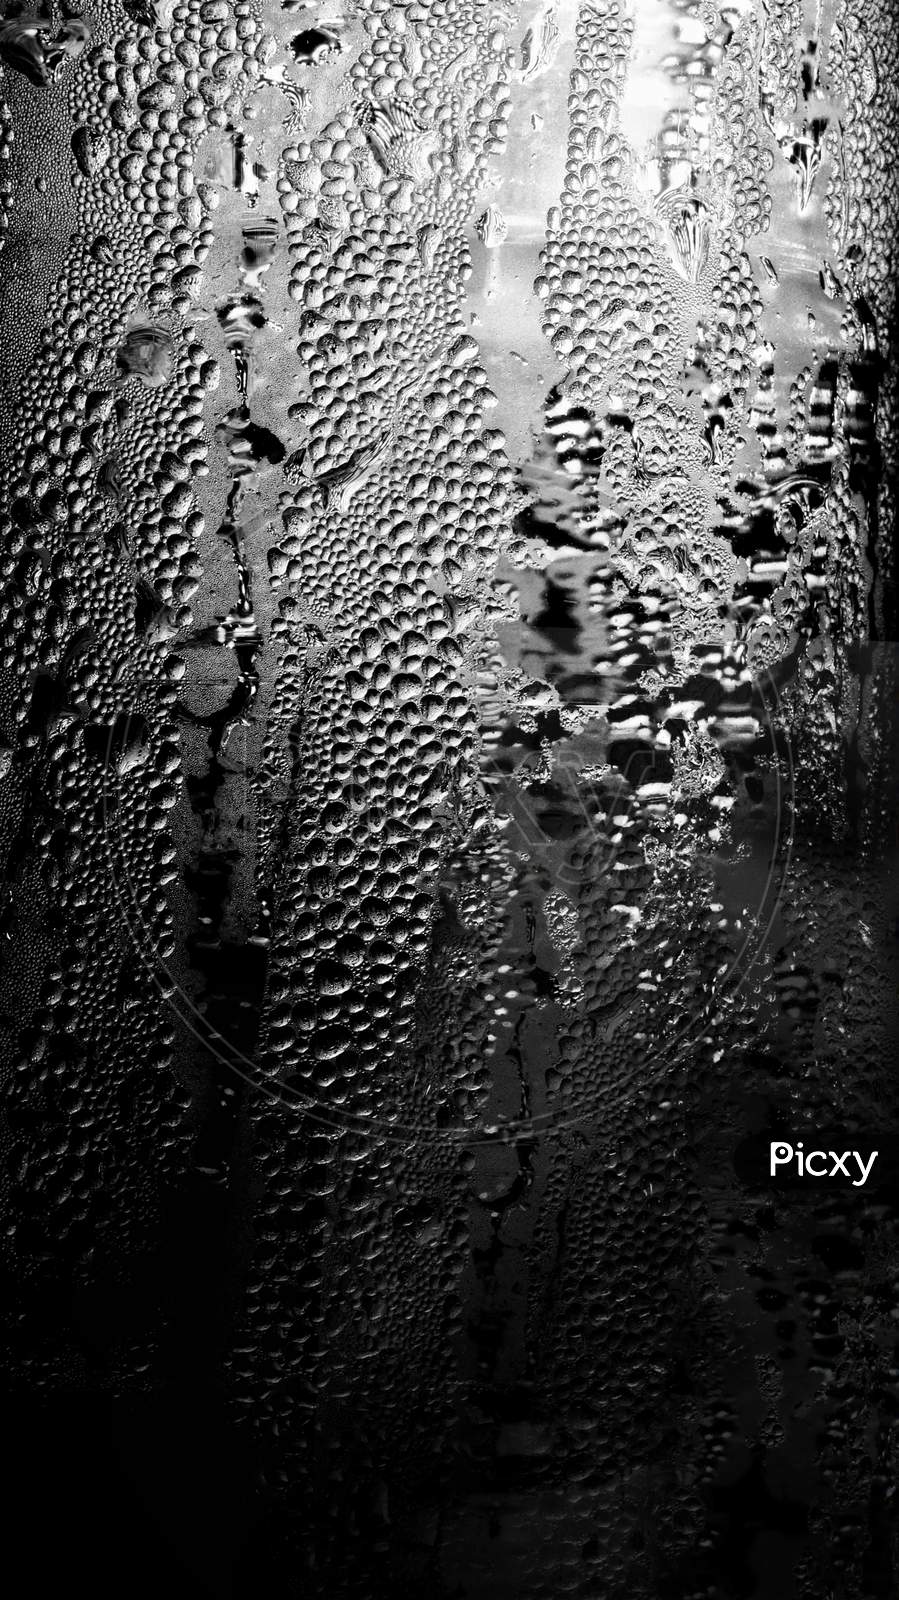 Water droplets macro shot